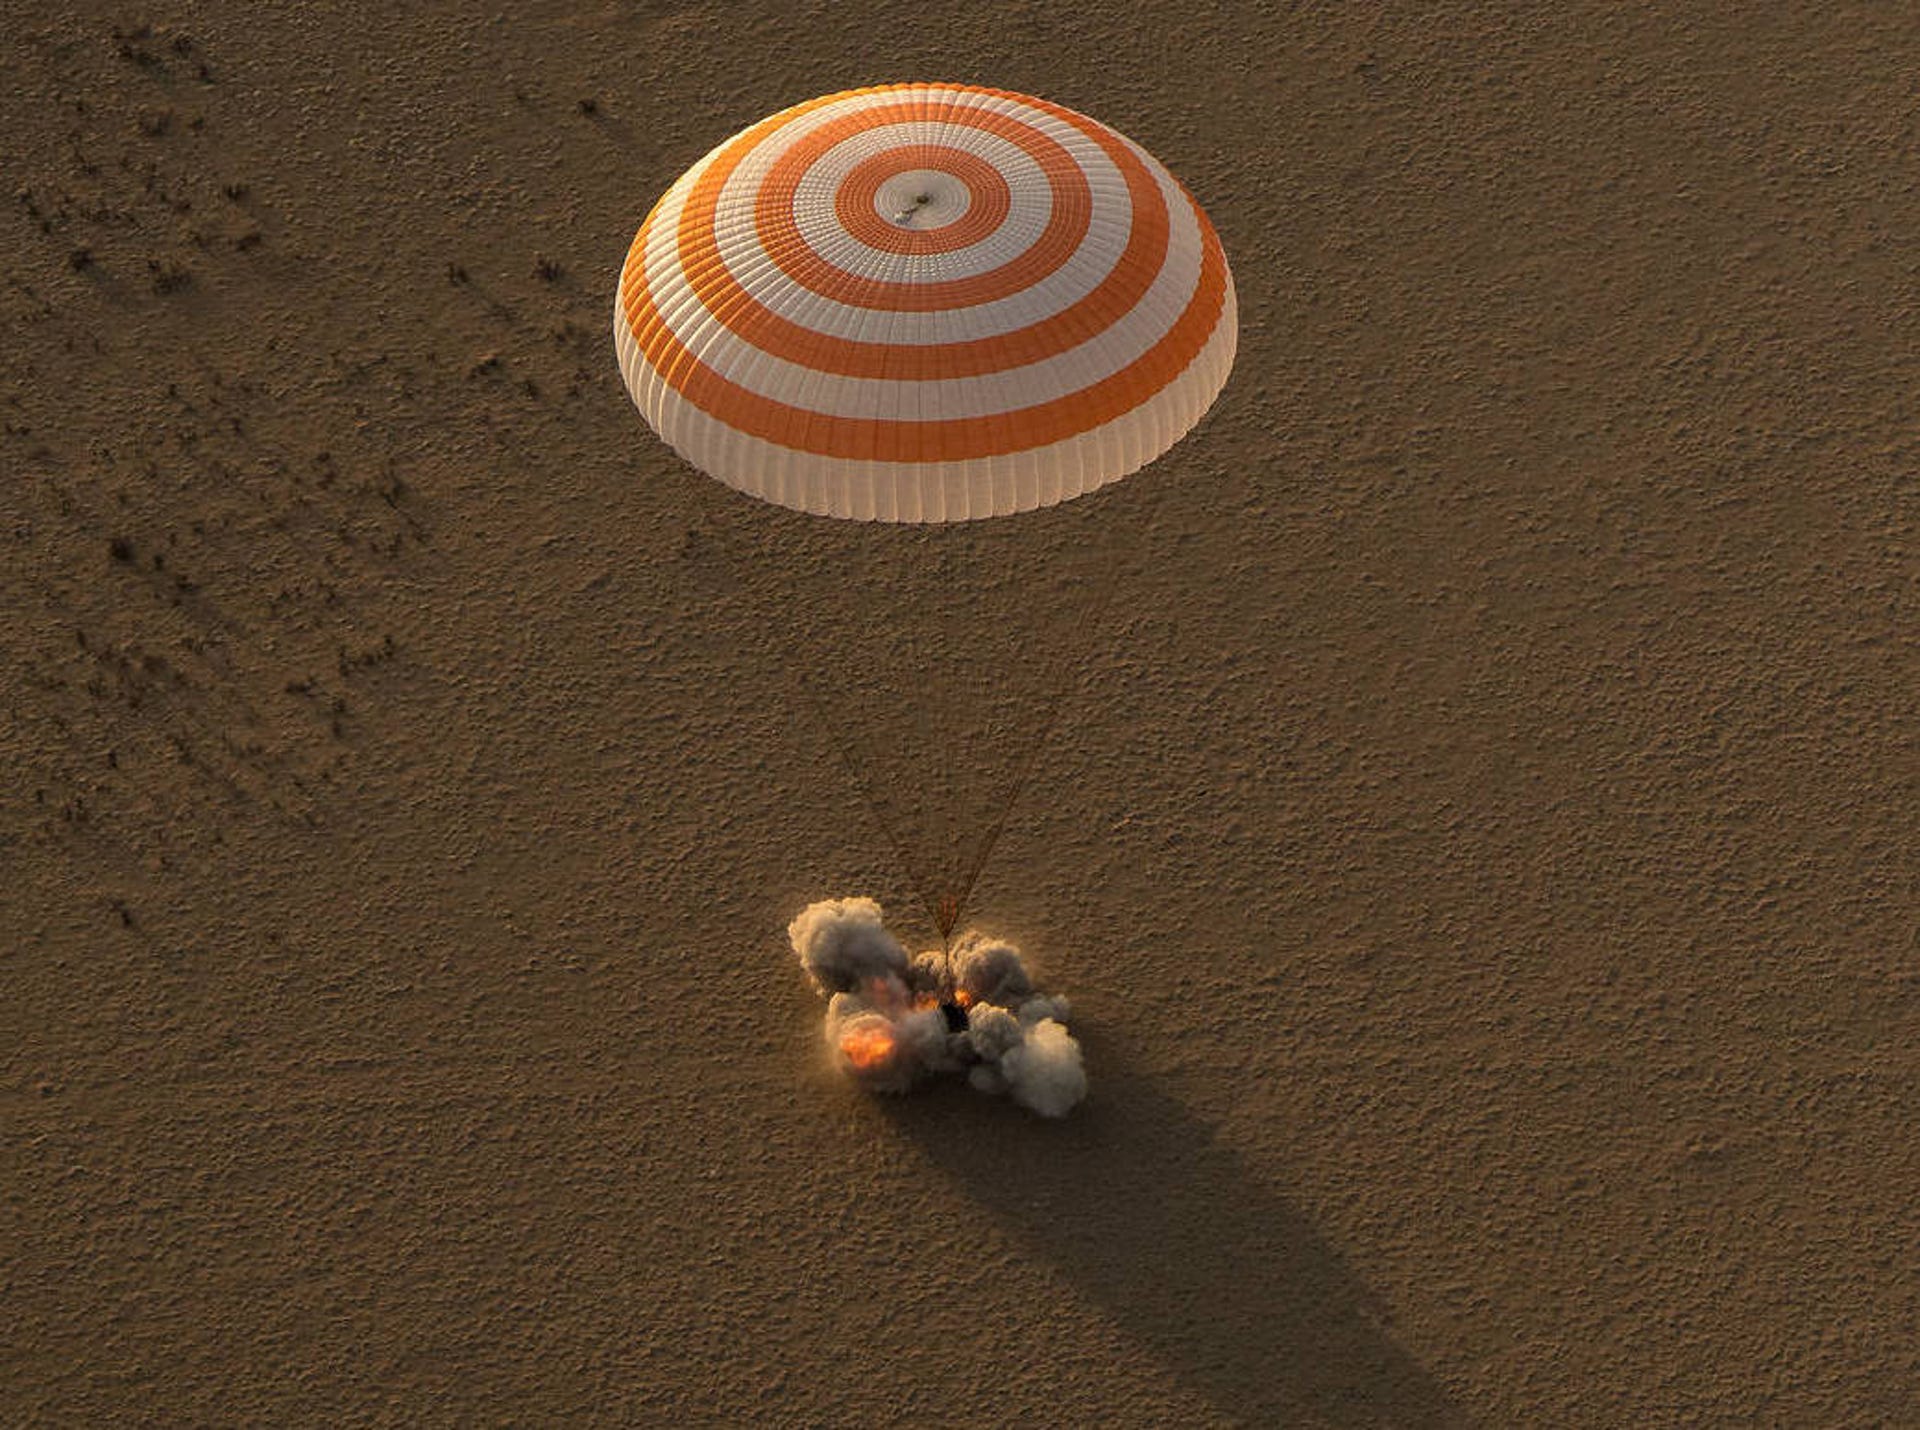 Soyuz MS-04 spacecraft landing in Kazakhstan